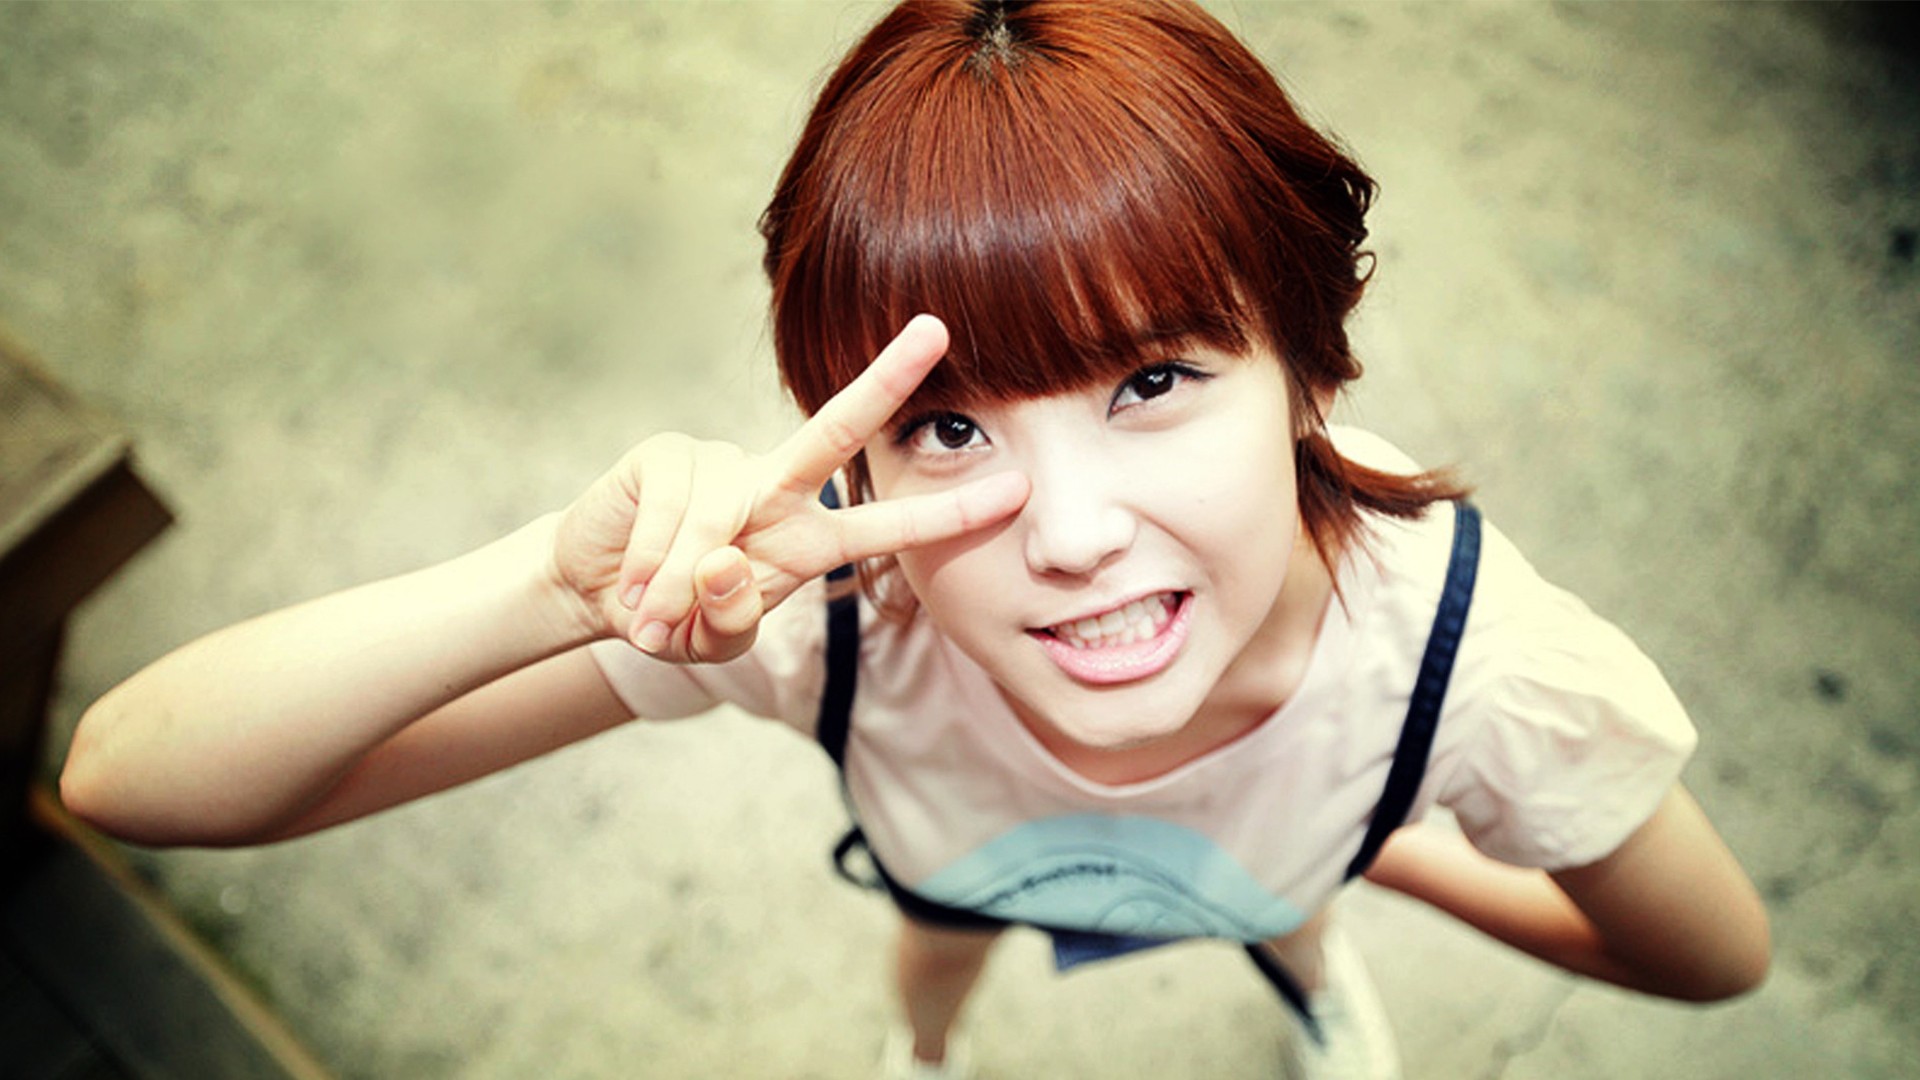 People 1920x1080 K-pop women Asian singer redhead brown eyes Lee Ji-Eun hand gesture dyed hair looking up T-shirt